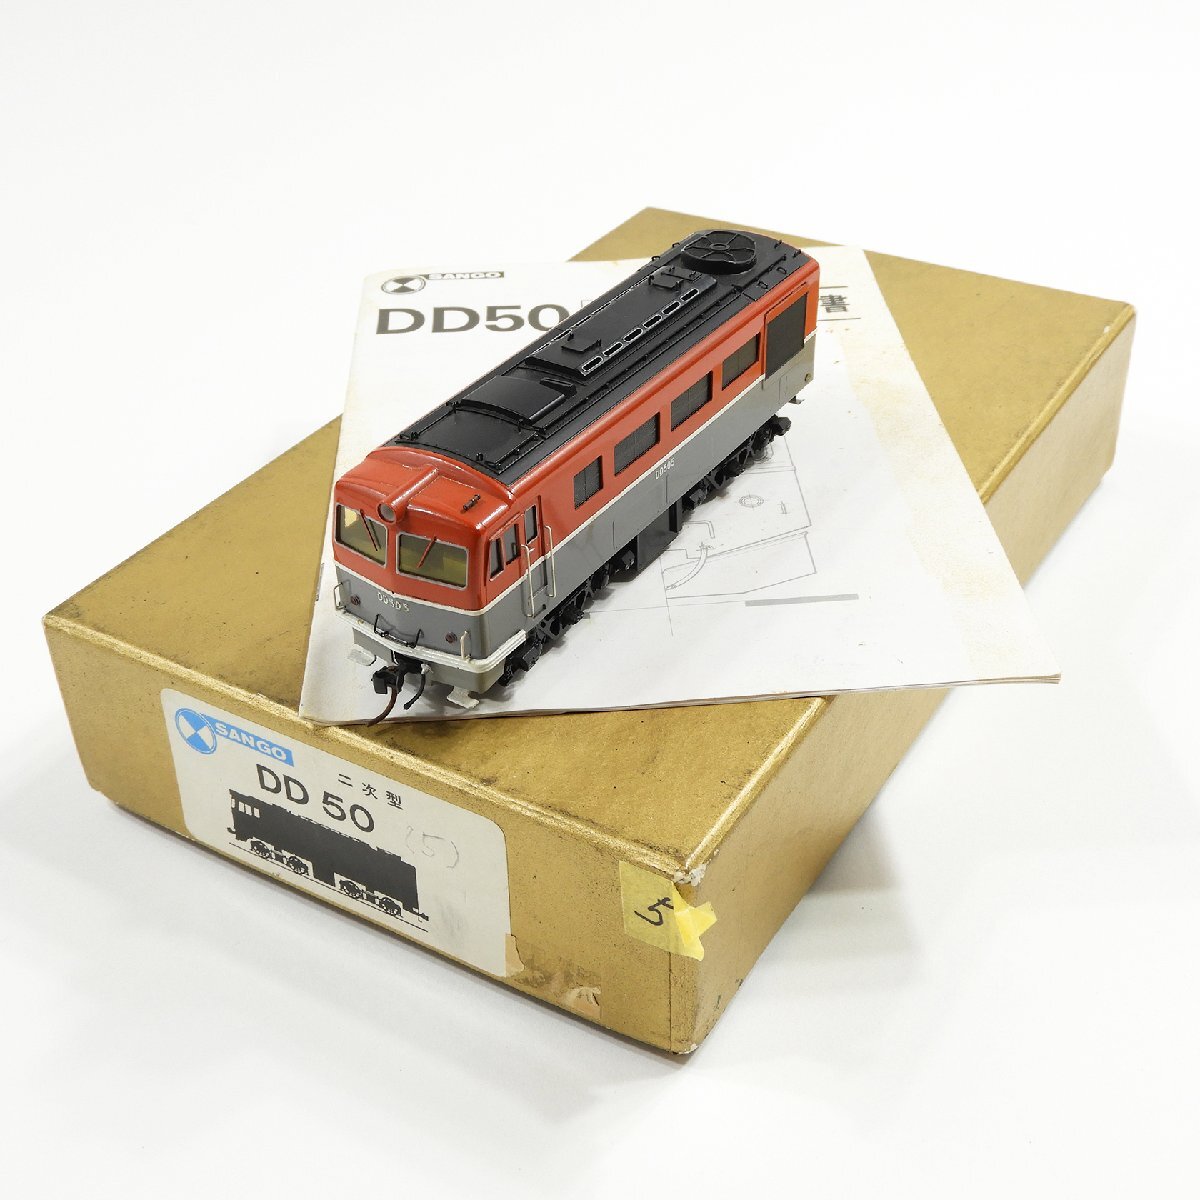 DD50(5) 珊瑚模型キット組立品 #17475 鉄道模型 ホビー 趣味 コレクション